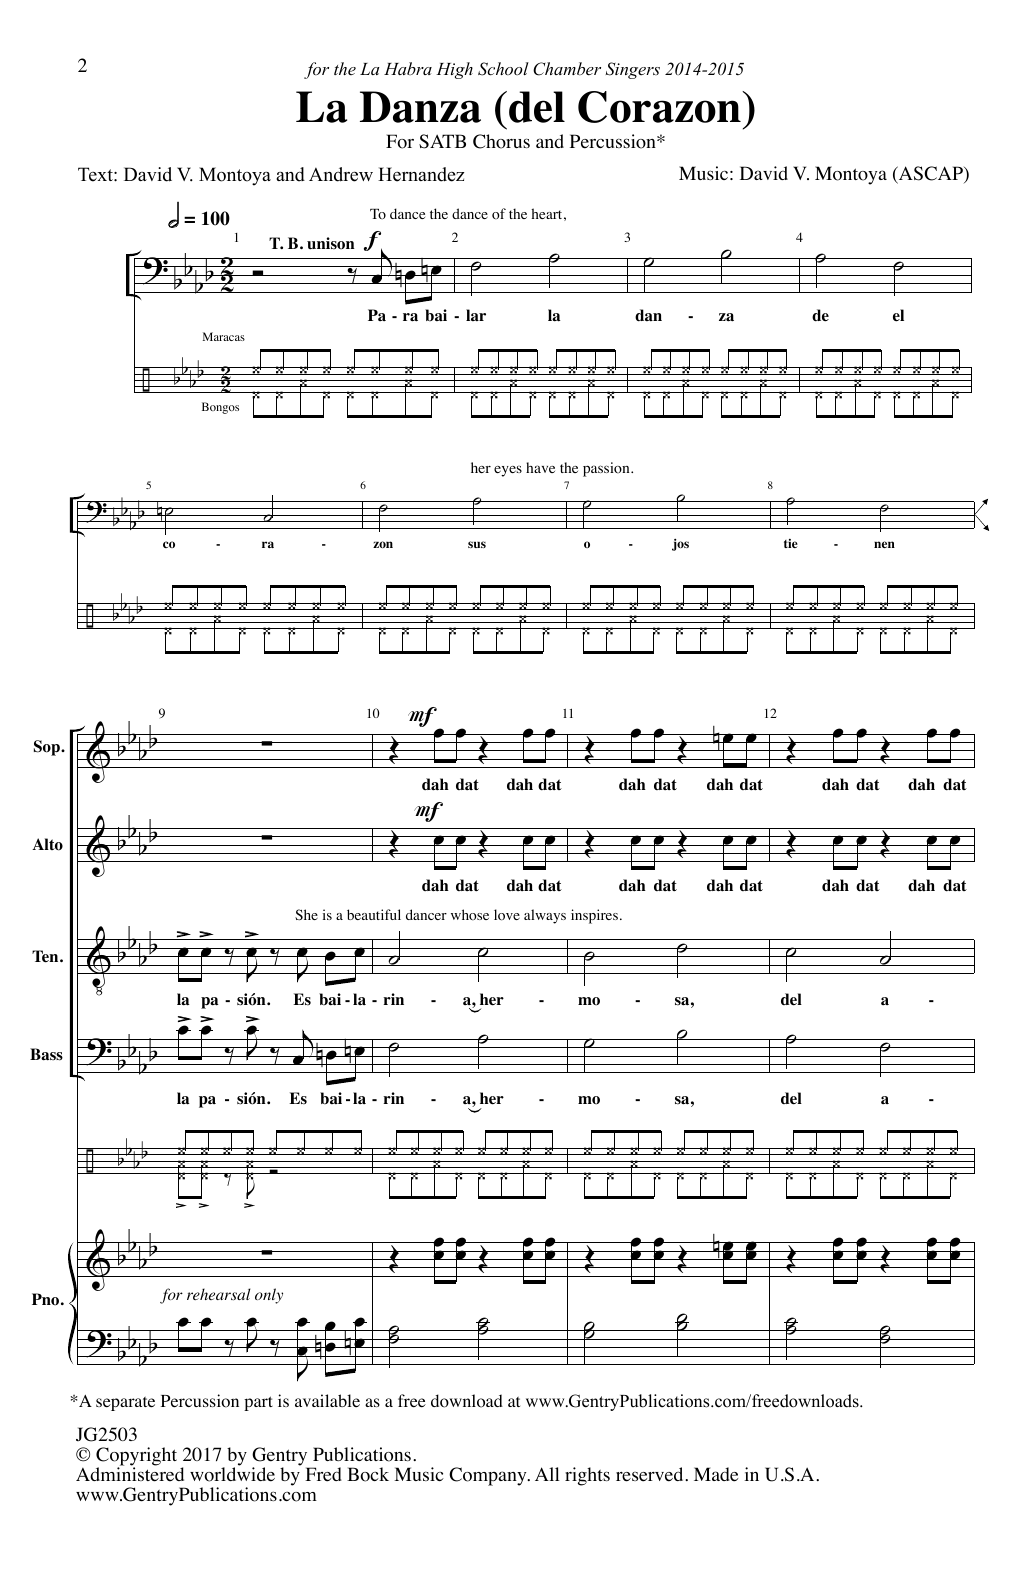 Download David Montoya La Danza Del Corazon Sheet Music and learn how to play SATB Choir PDF digital score in minutes